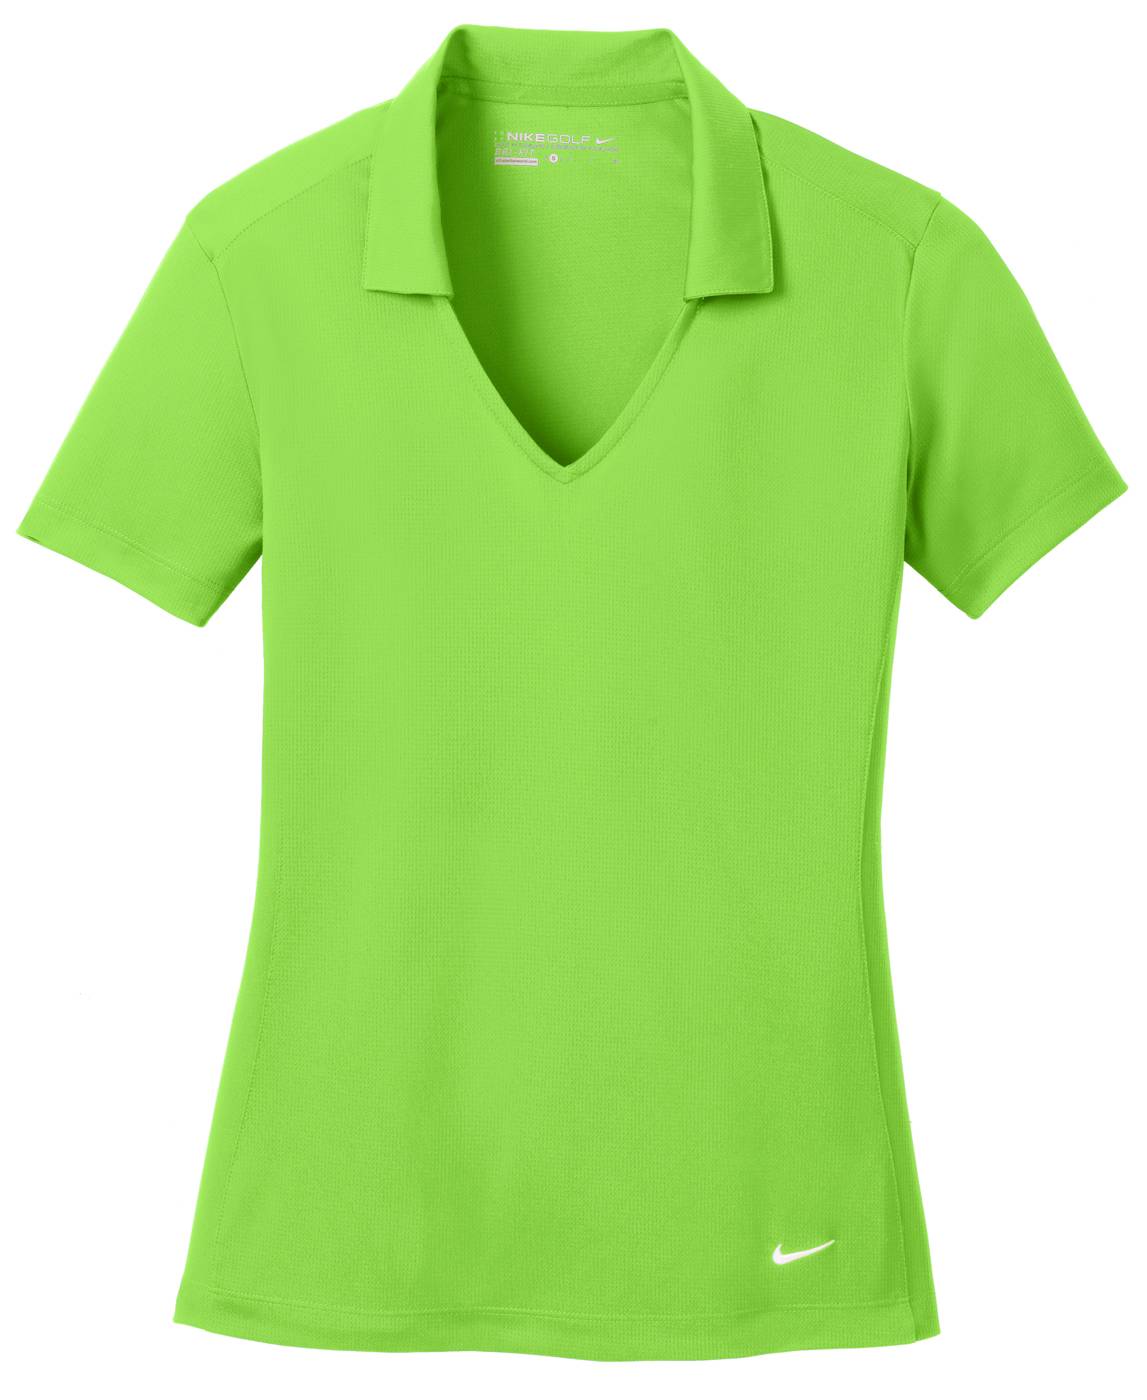 Nike Polo Shirt Size Chart